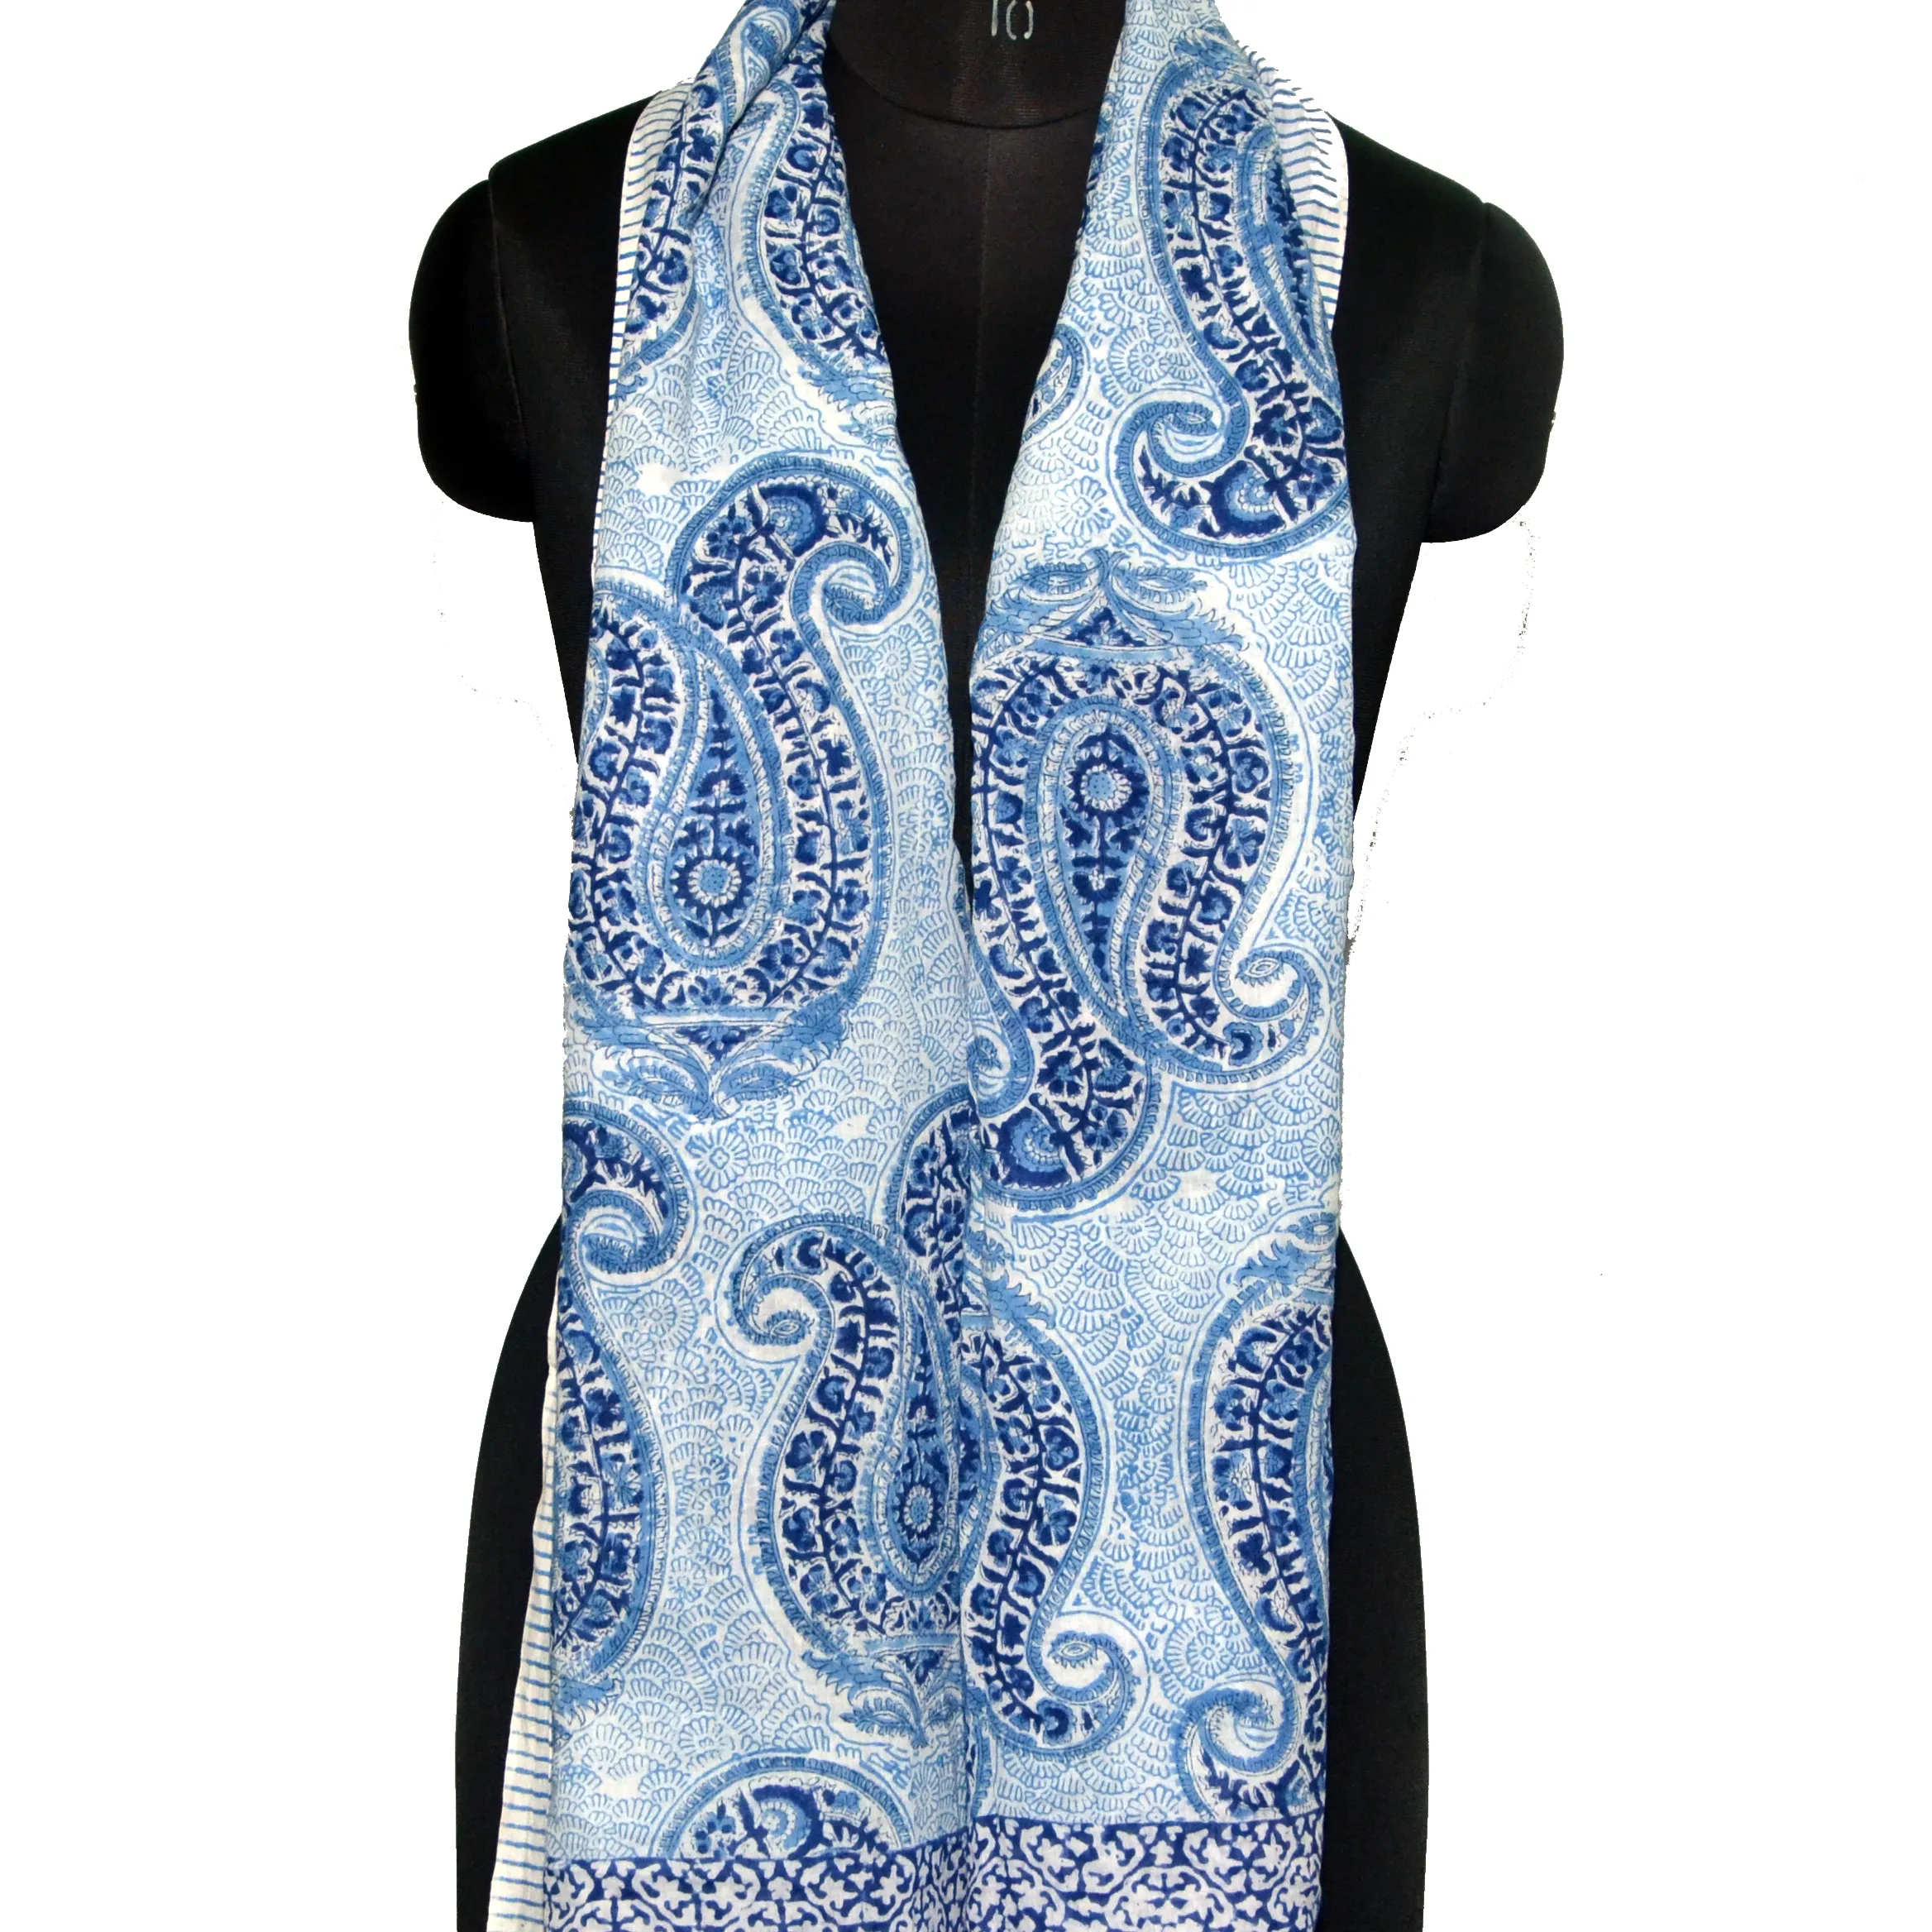 Blauer Blumen-Baumwoll anzug mit Chiffon Dupatta Premium Quality Handmade Bulk Quality Großhandels preis